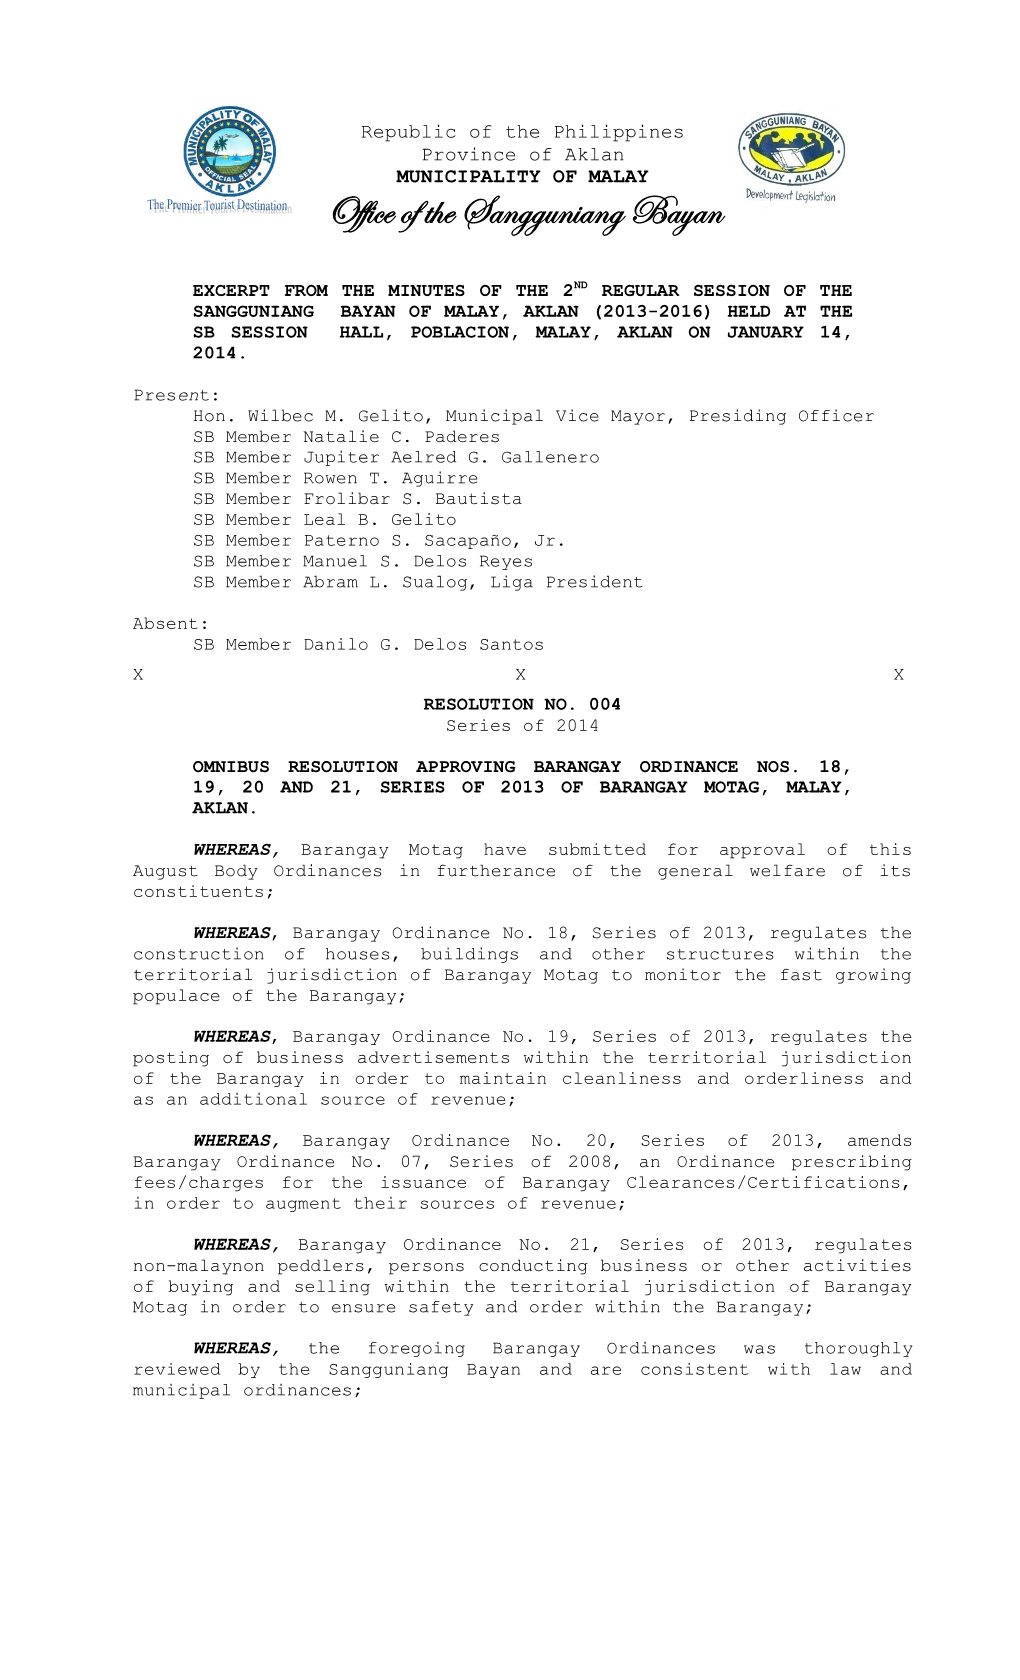 Resolution No. 004, S. 2014